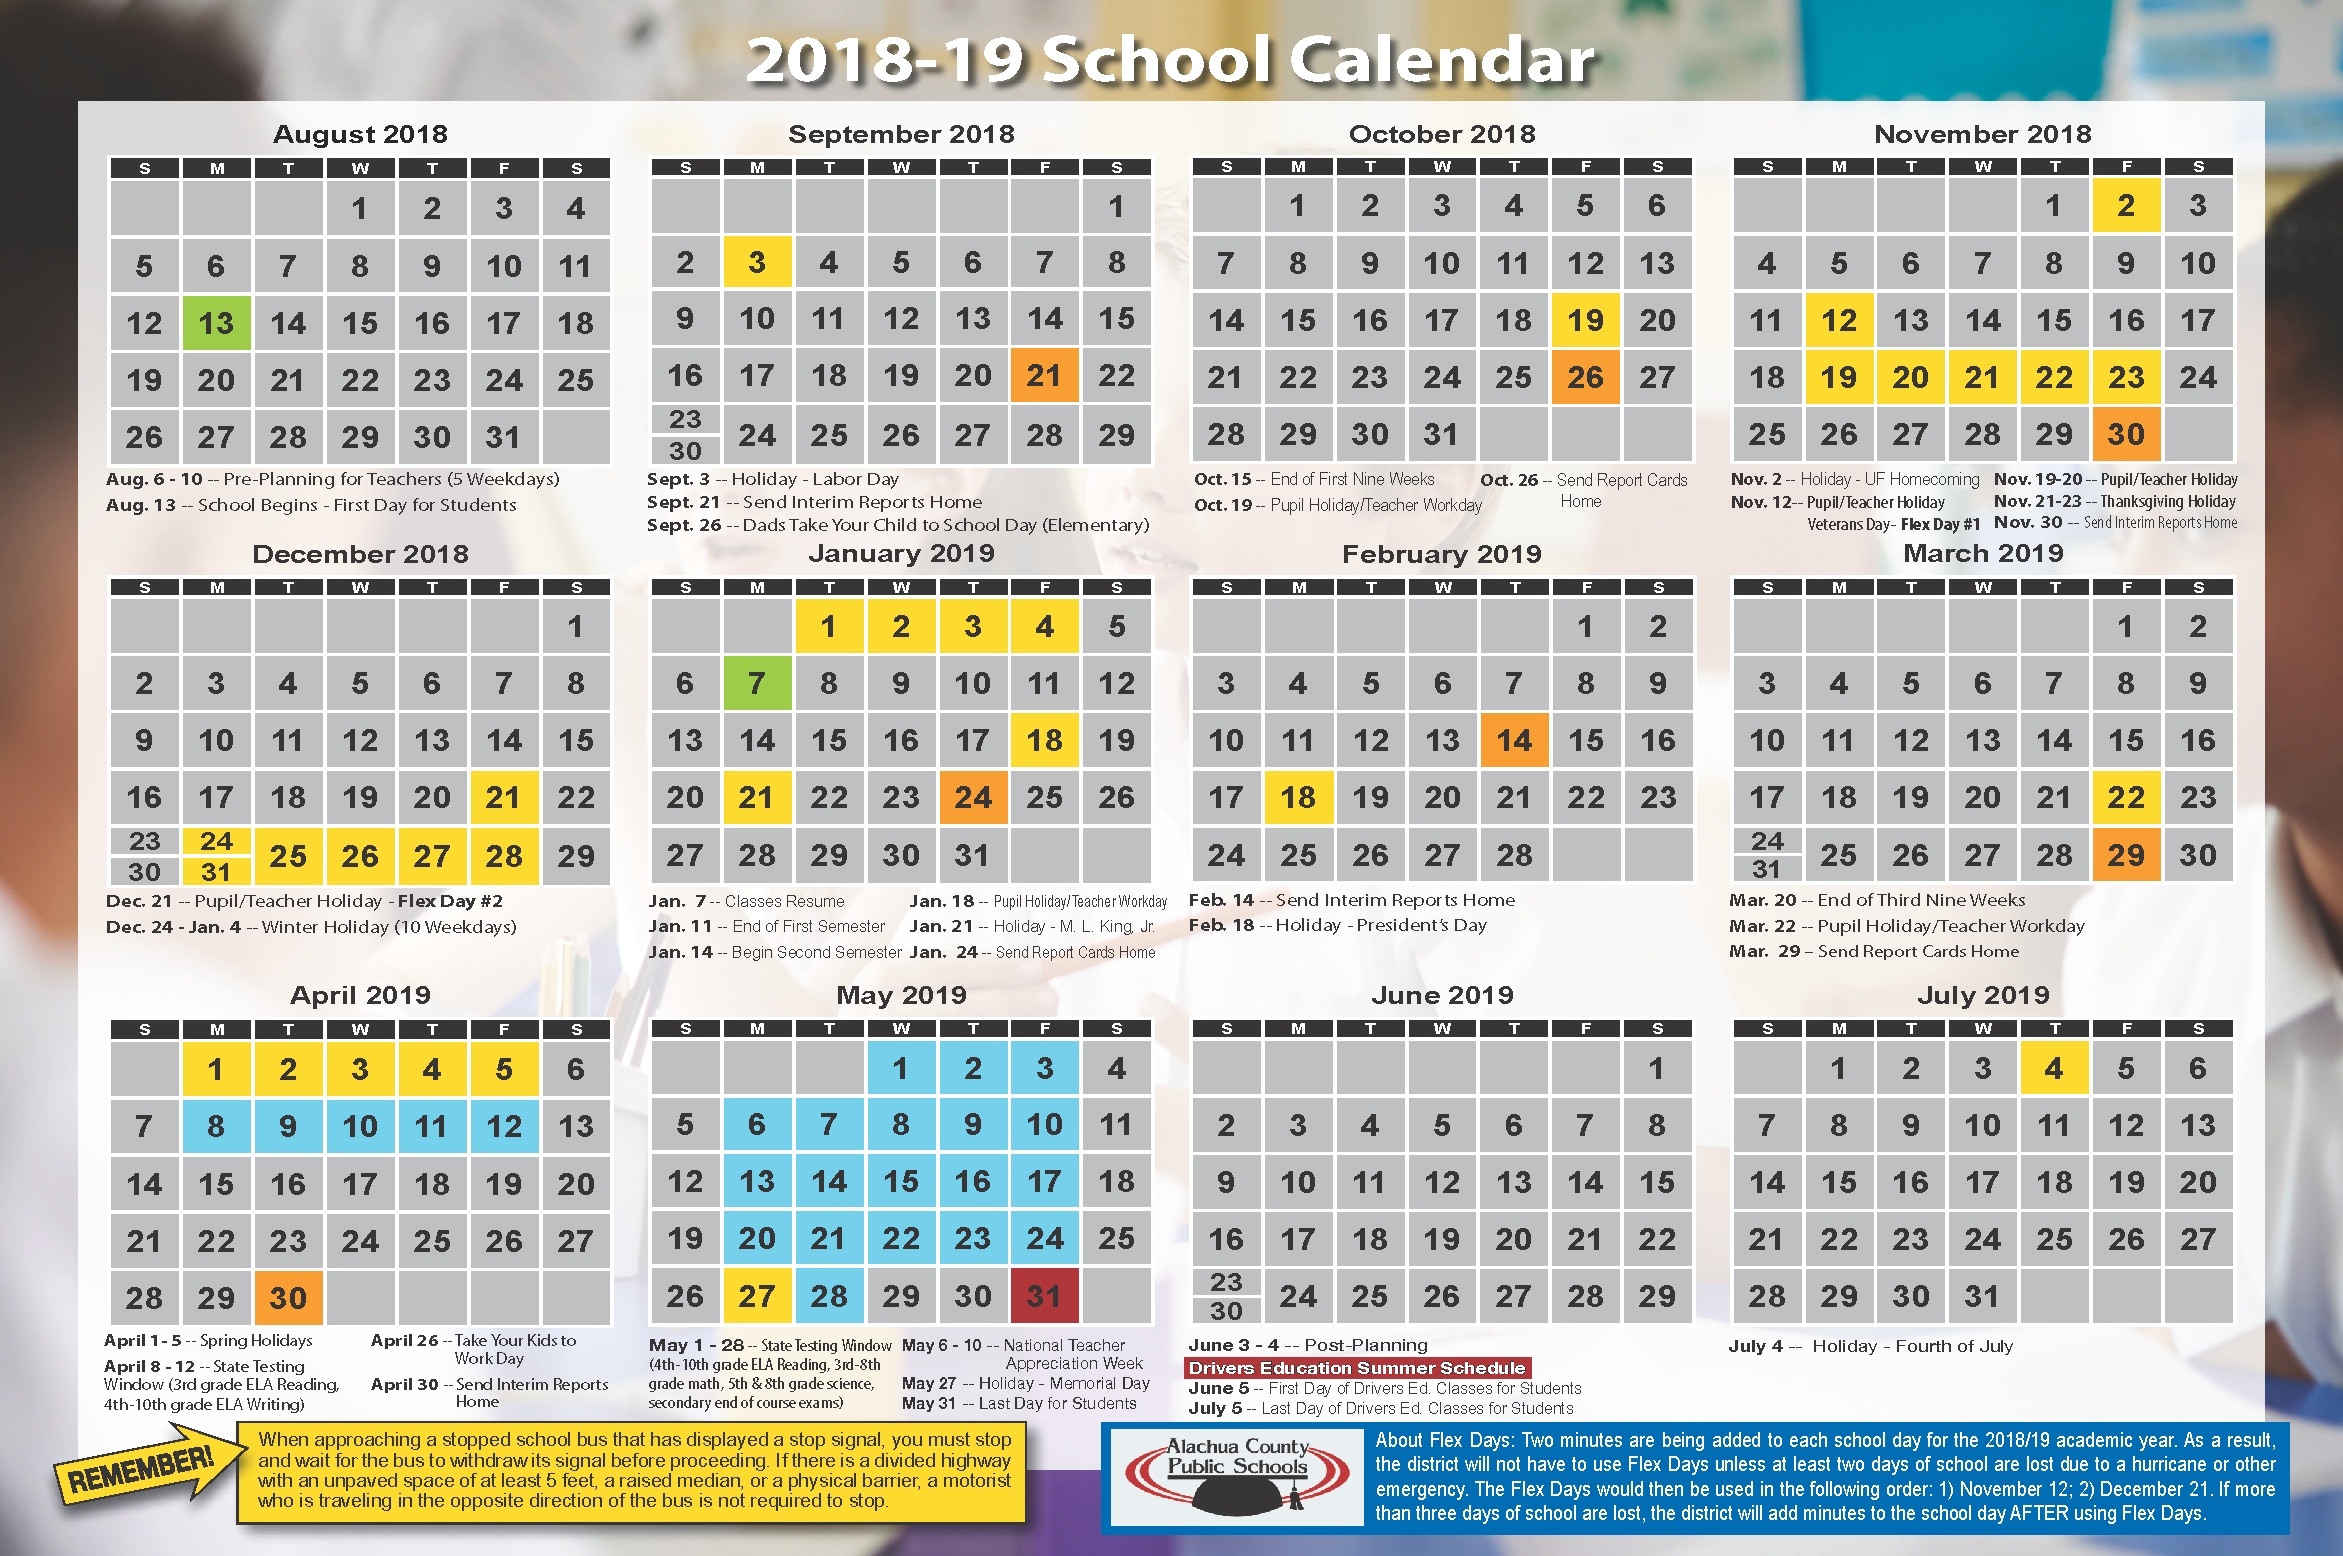 ✅Duval County School Calendar - You Calendars School Calendar For Duval County